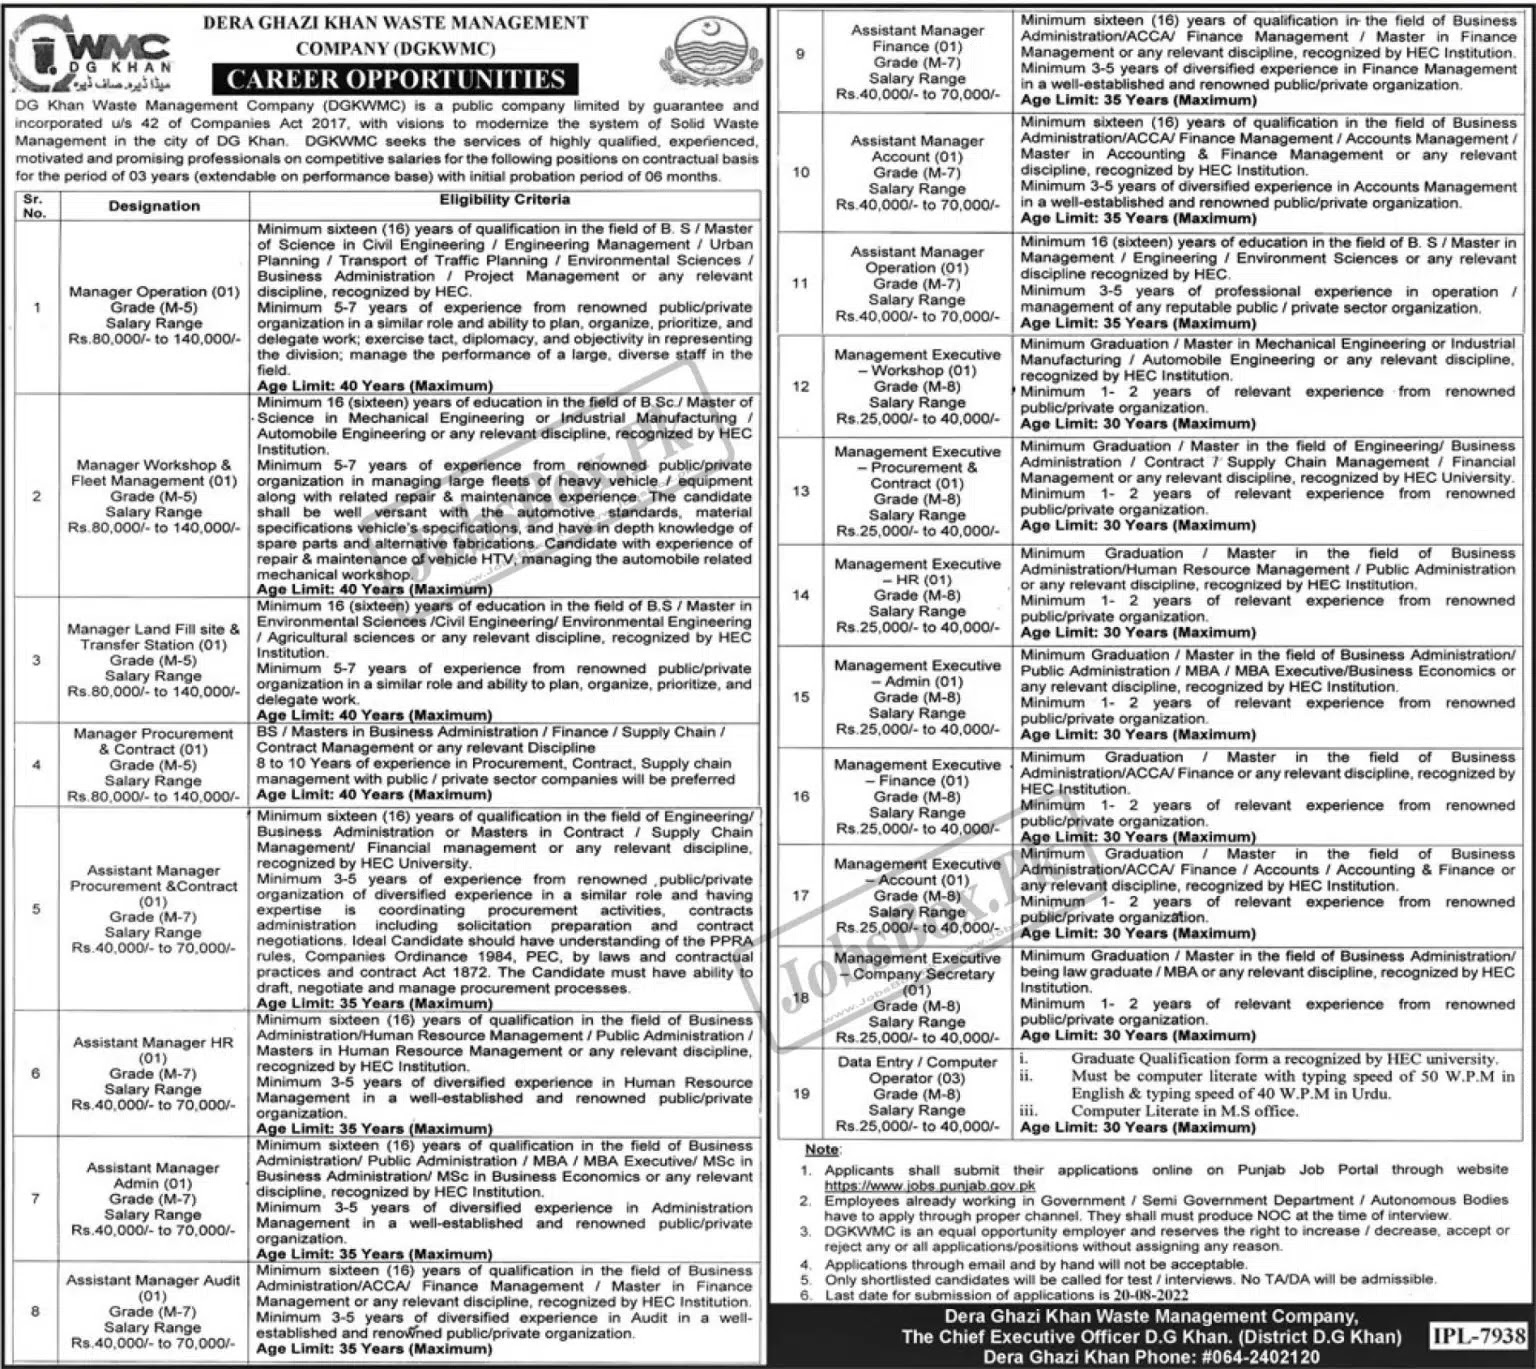 DG Khan Waste Management Company Jobs 2022 - www.jobs.punjab.gov.pk Jobs 2022